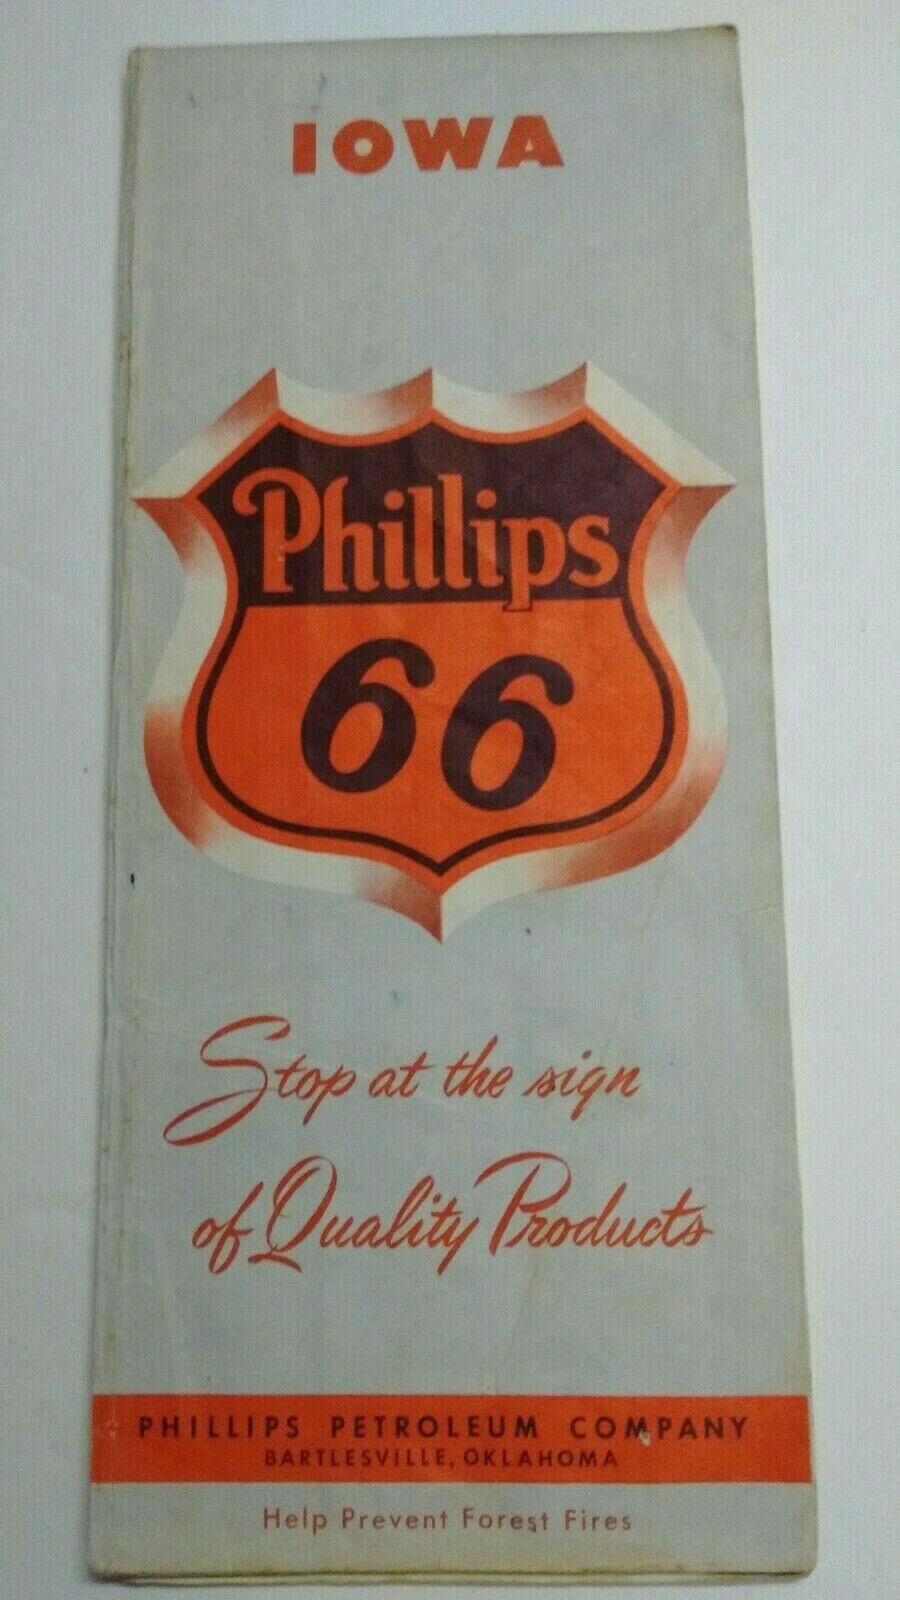 Vintage 1957 PHILLIPS 66 Gasoline Road Map IOWA